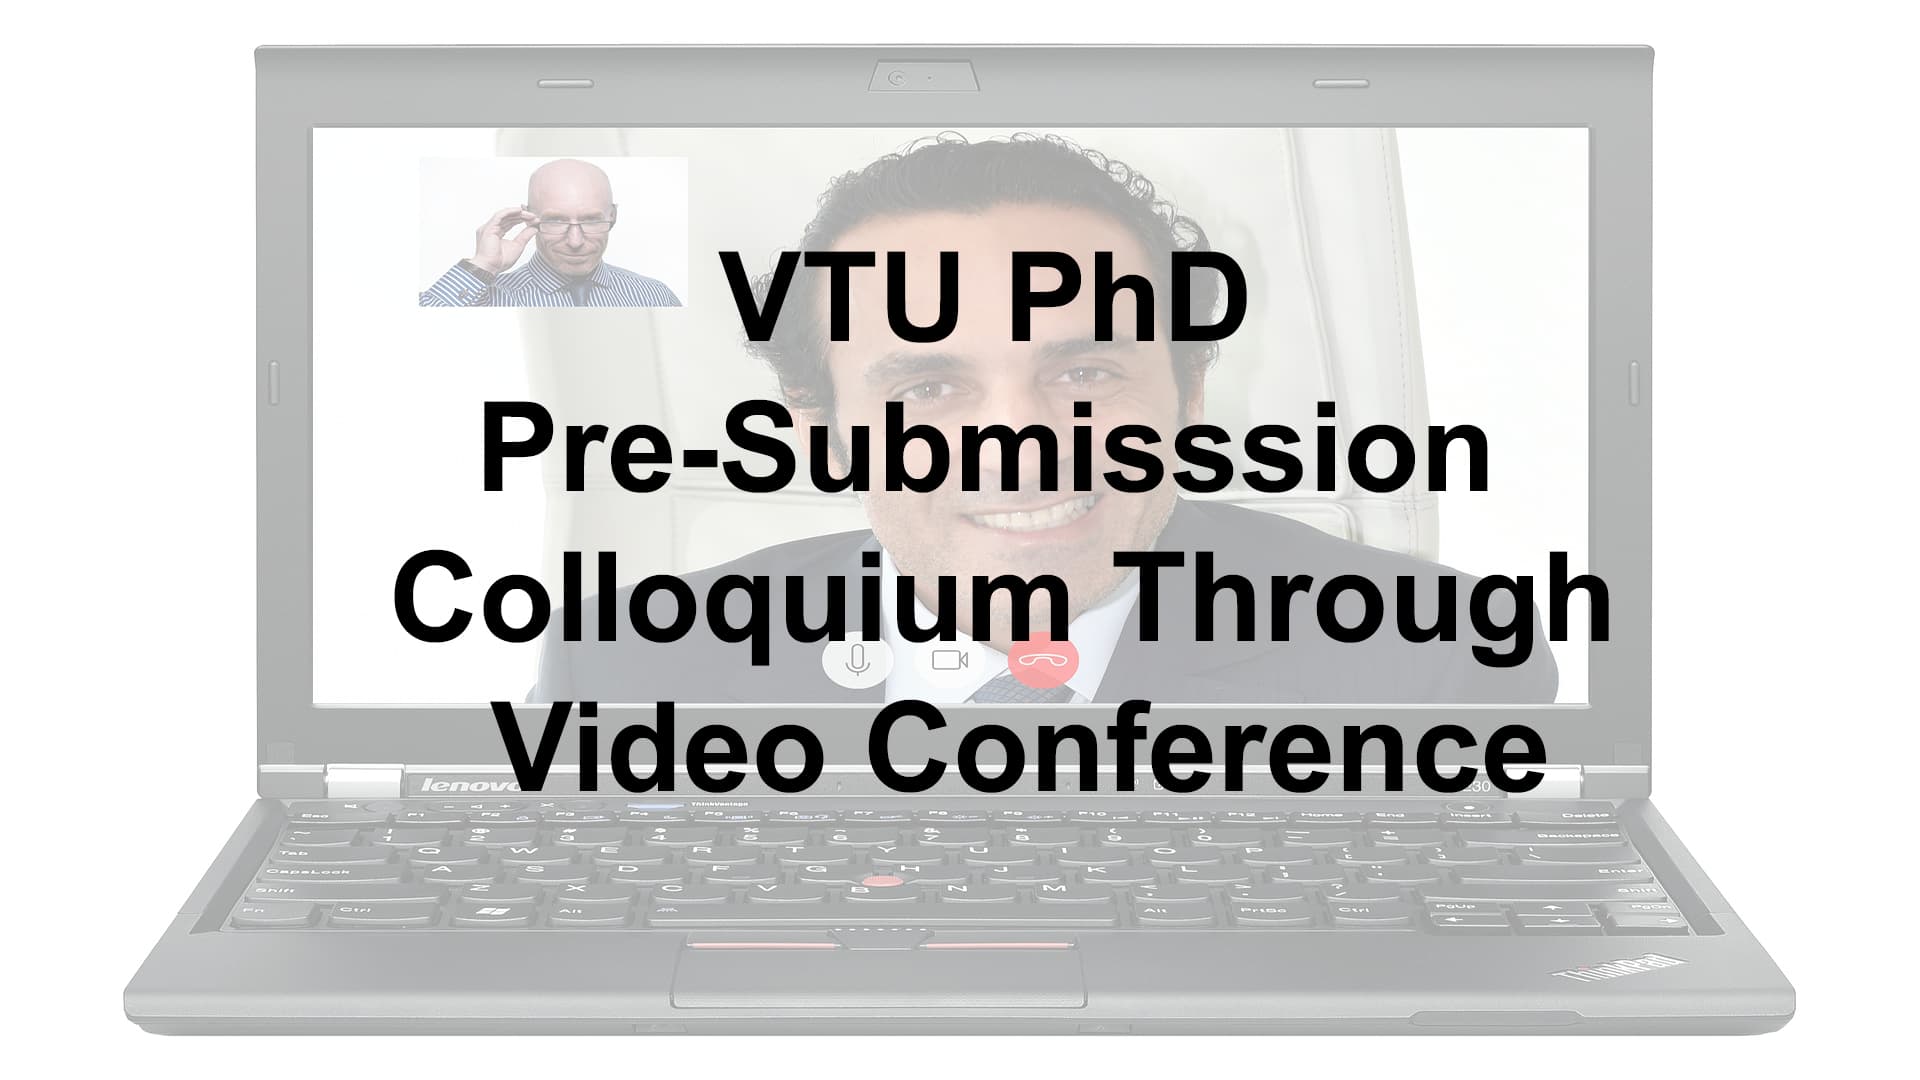 VTU PhD Pre-Submission Colloquium Through Video Conference